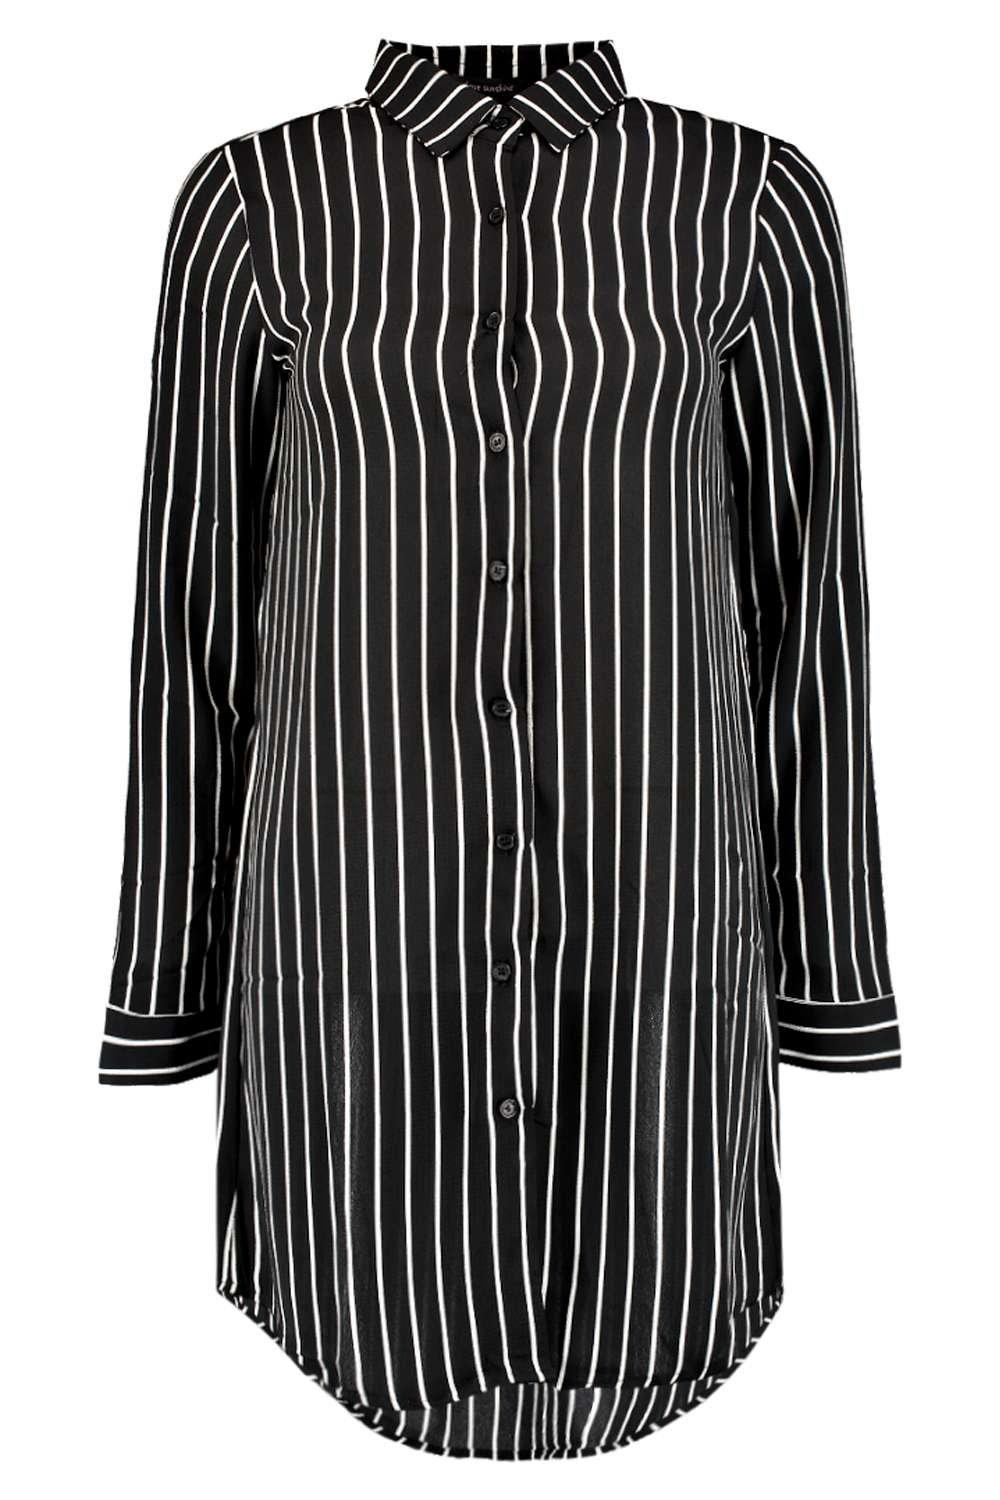 Boohoo Womens Zoe Oversized Striped Long Sleeve Shirt | eBay